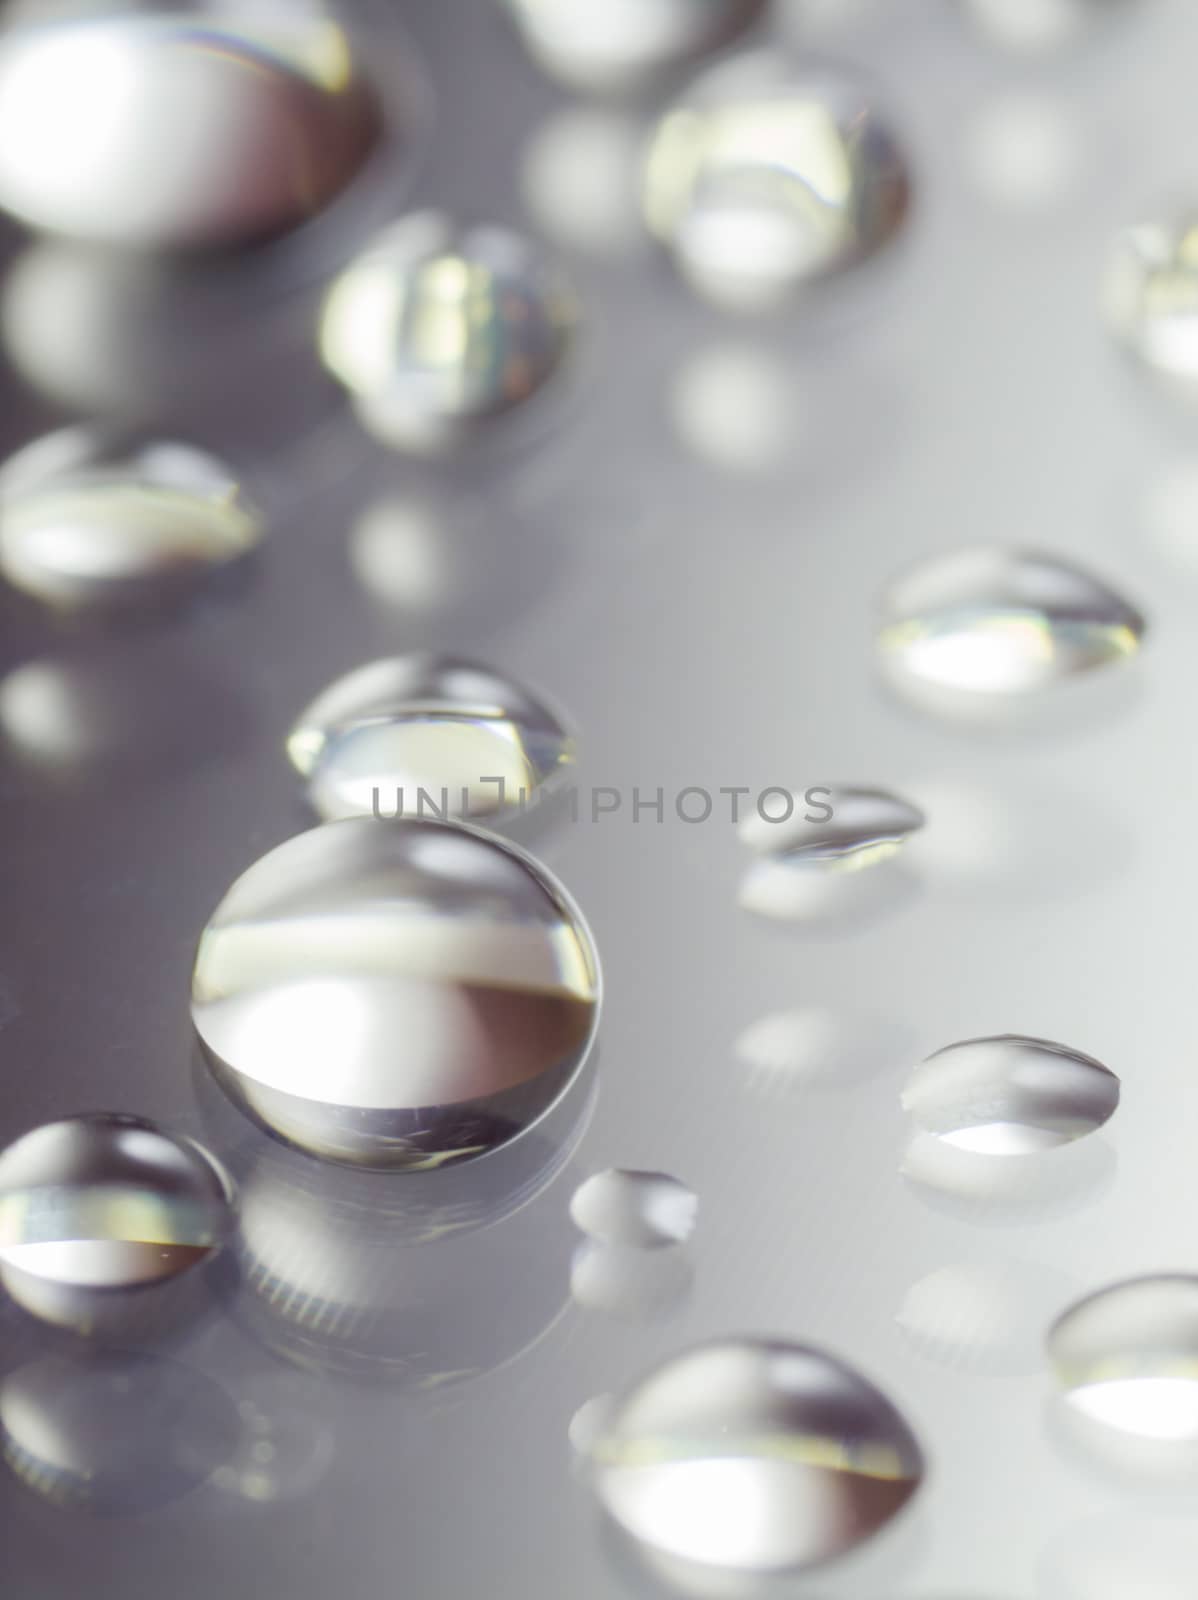 Abstract Waterdrops Closeup Background by levonarakelian